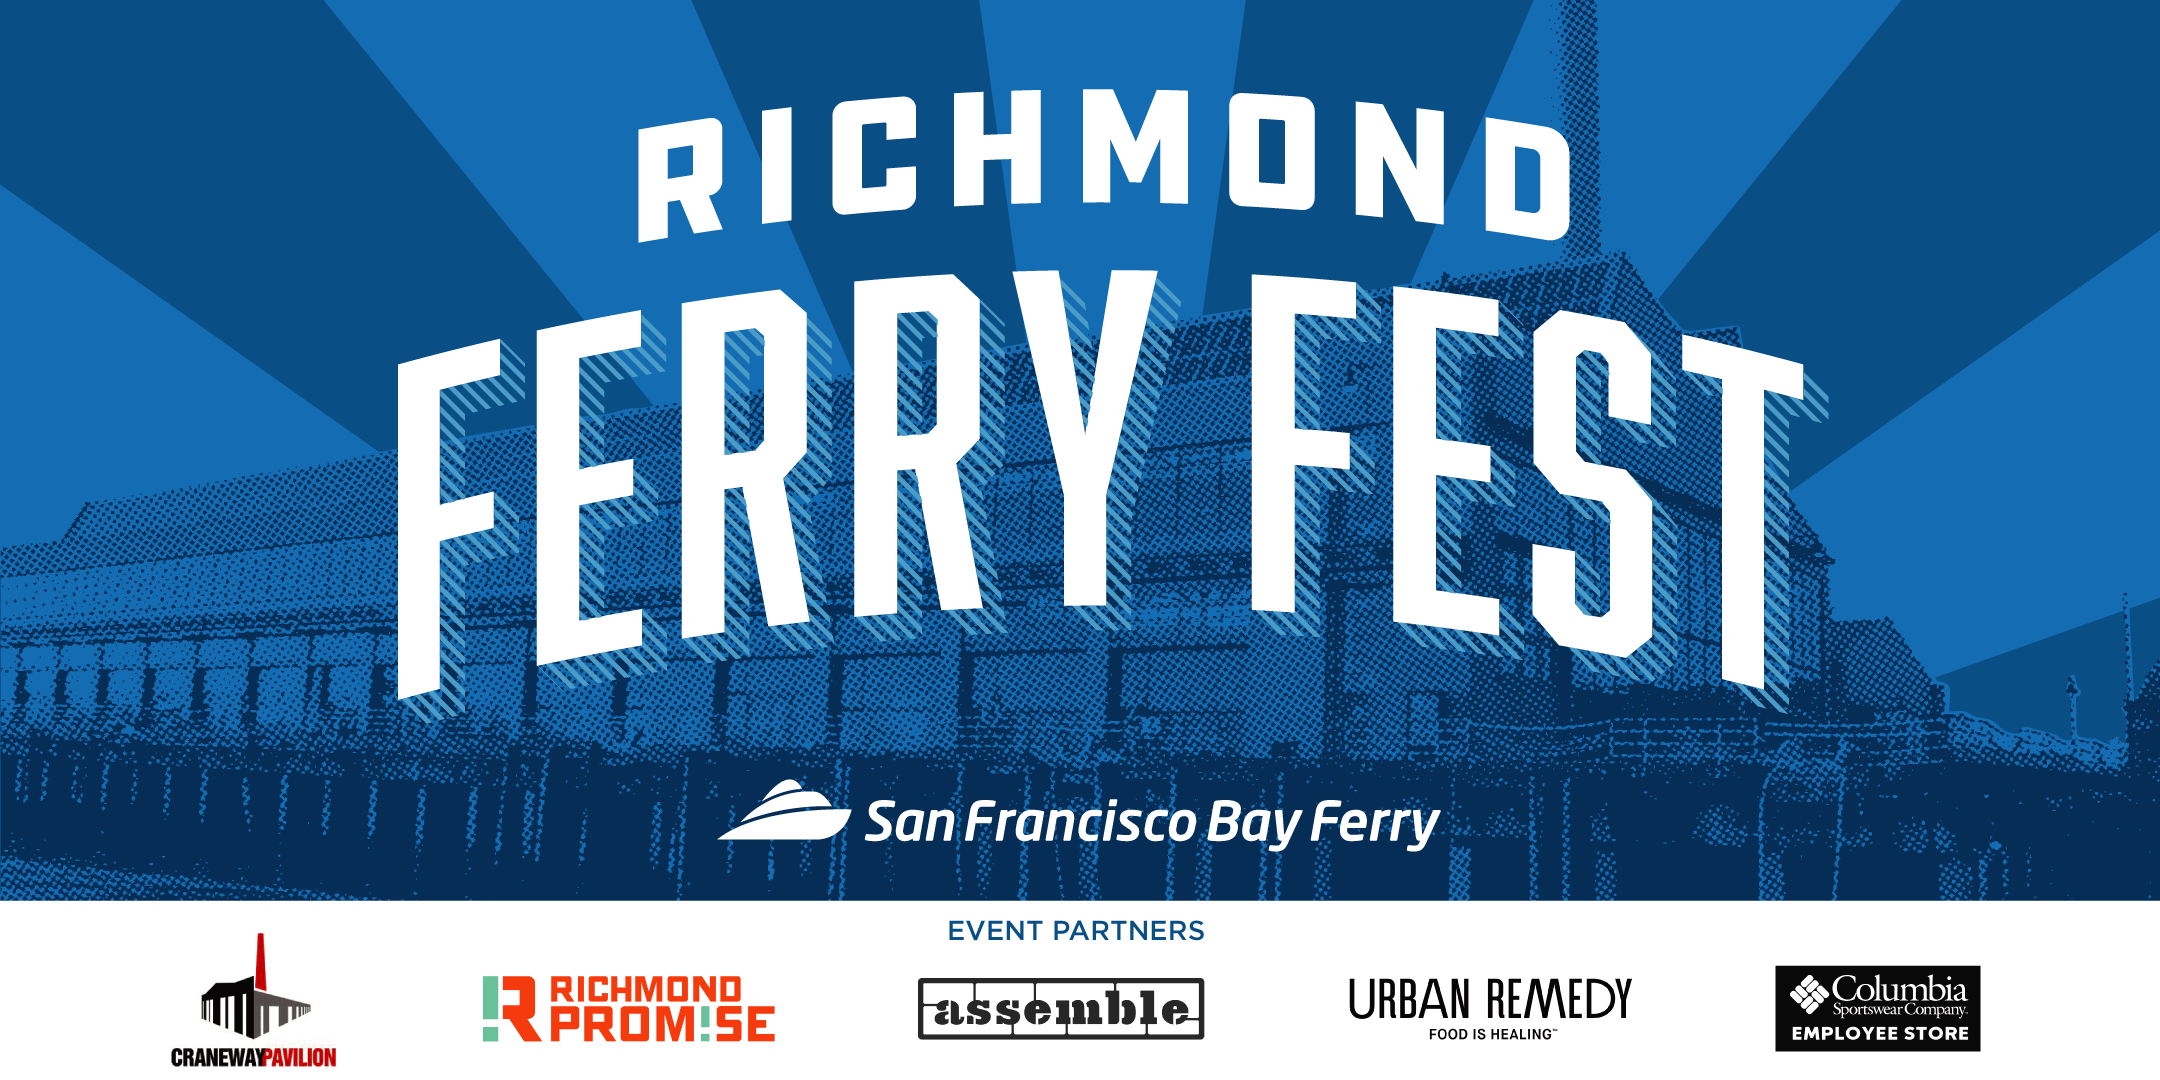 Richmond Ferry Fest